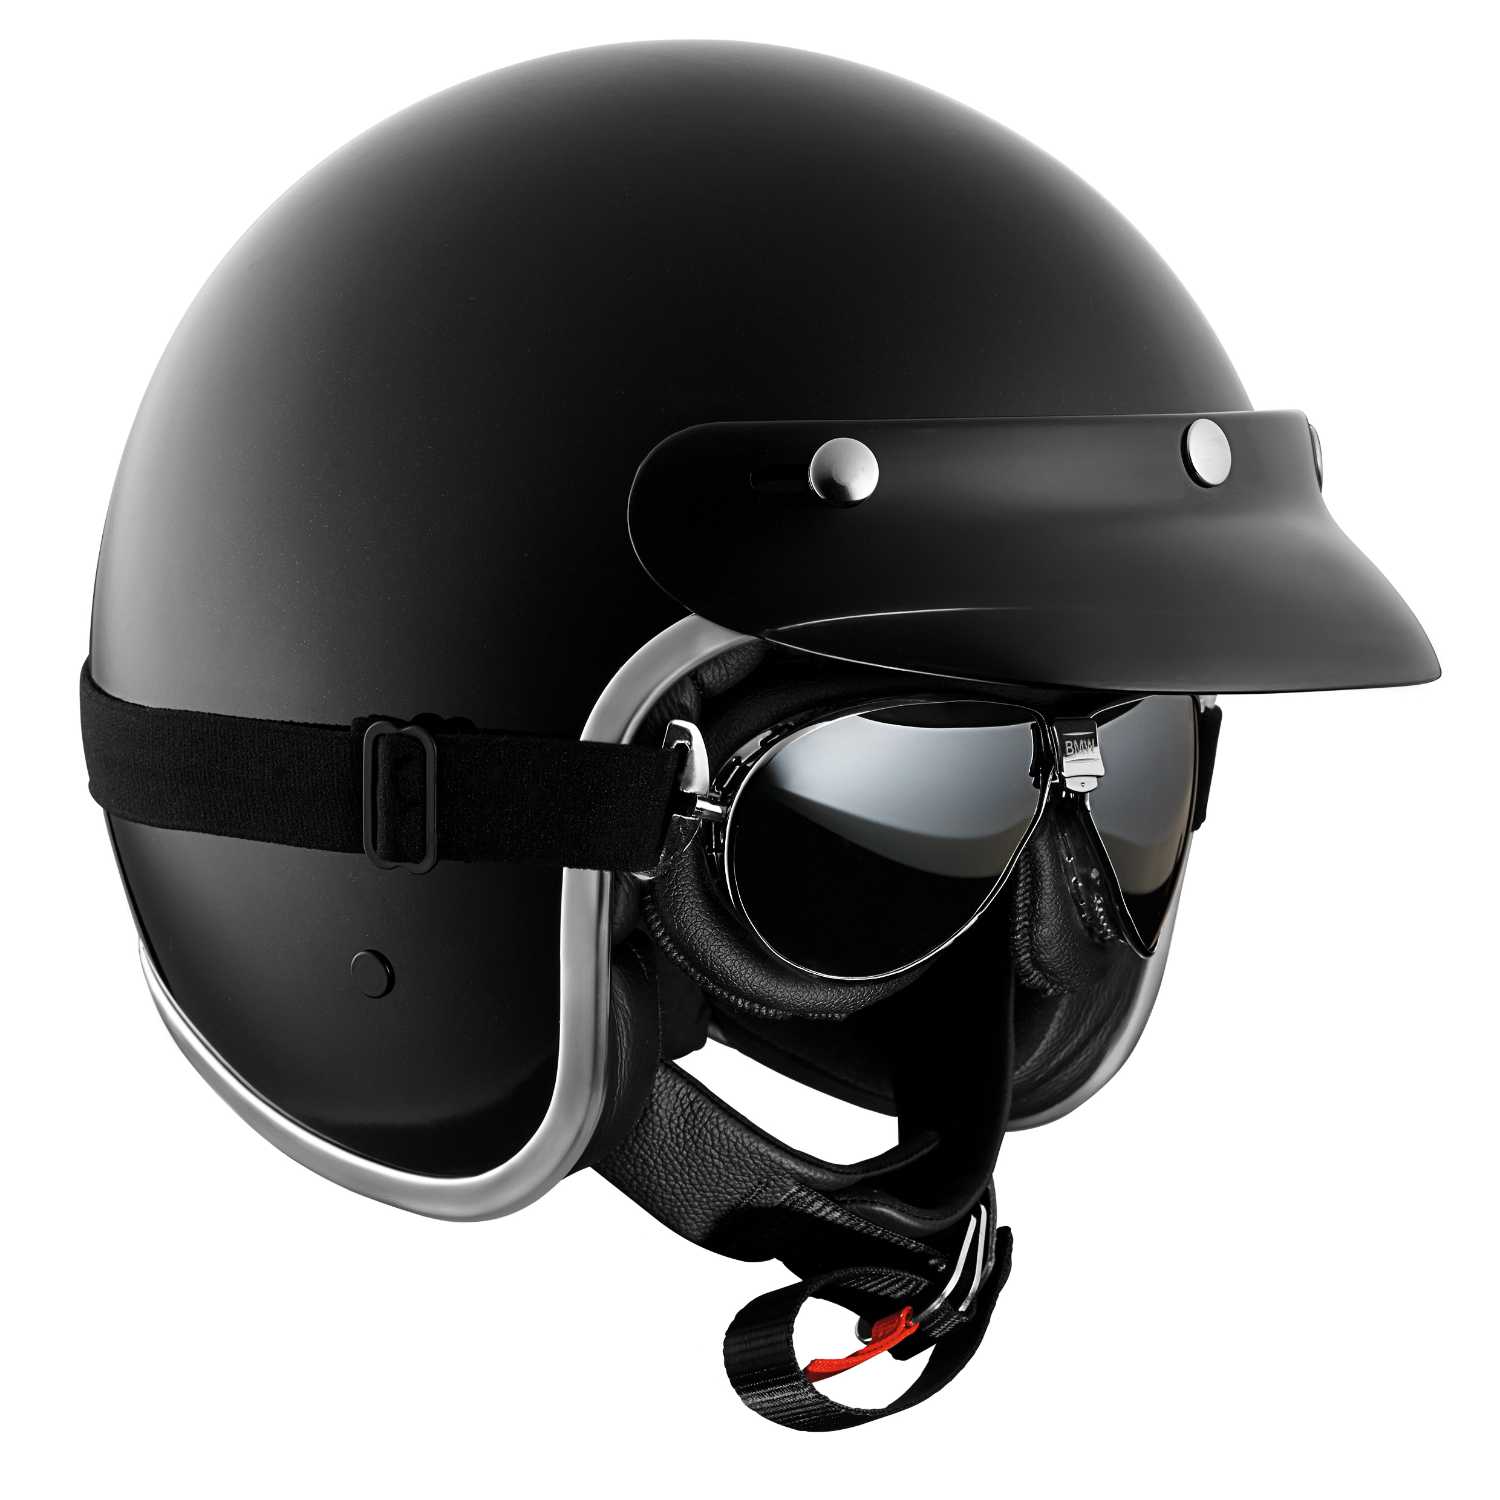 BMW Motorrad  Rider s Equipment Ride 2014 Legend helmet 